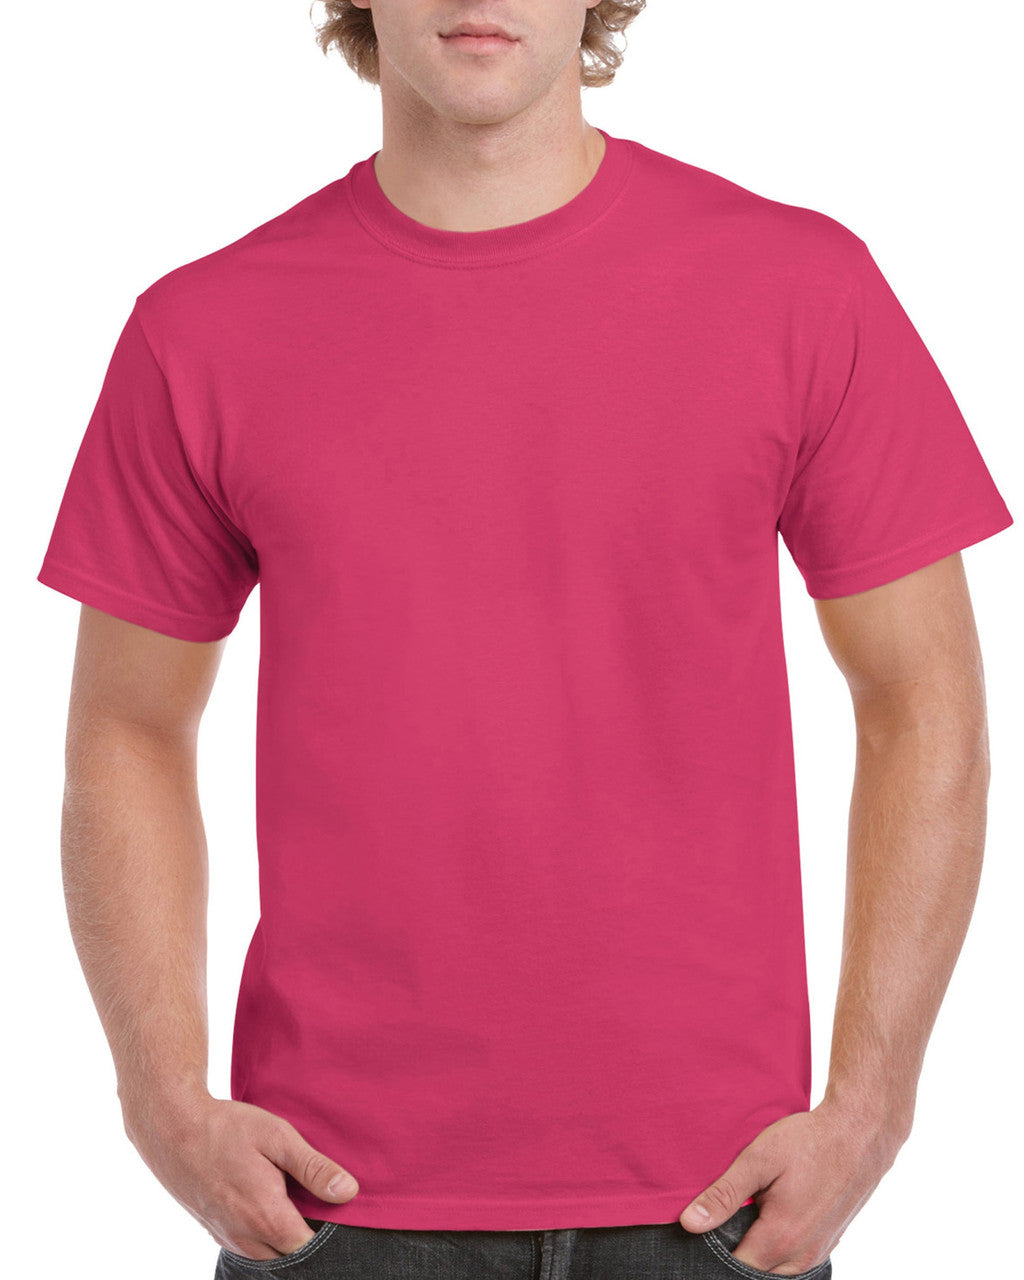 CLEARANCE Gildan T-Shirt - HELCONIA